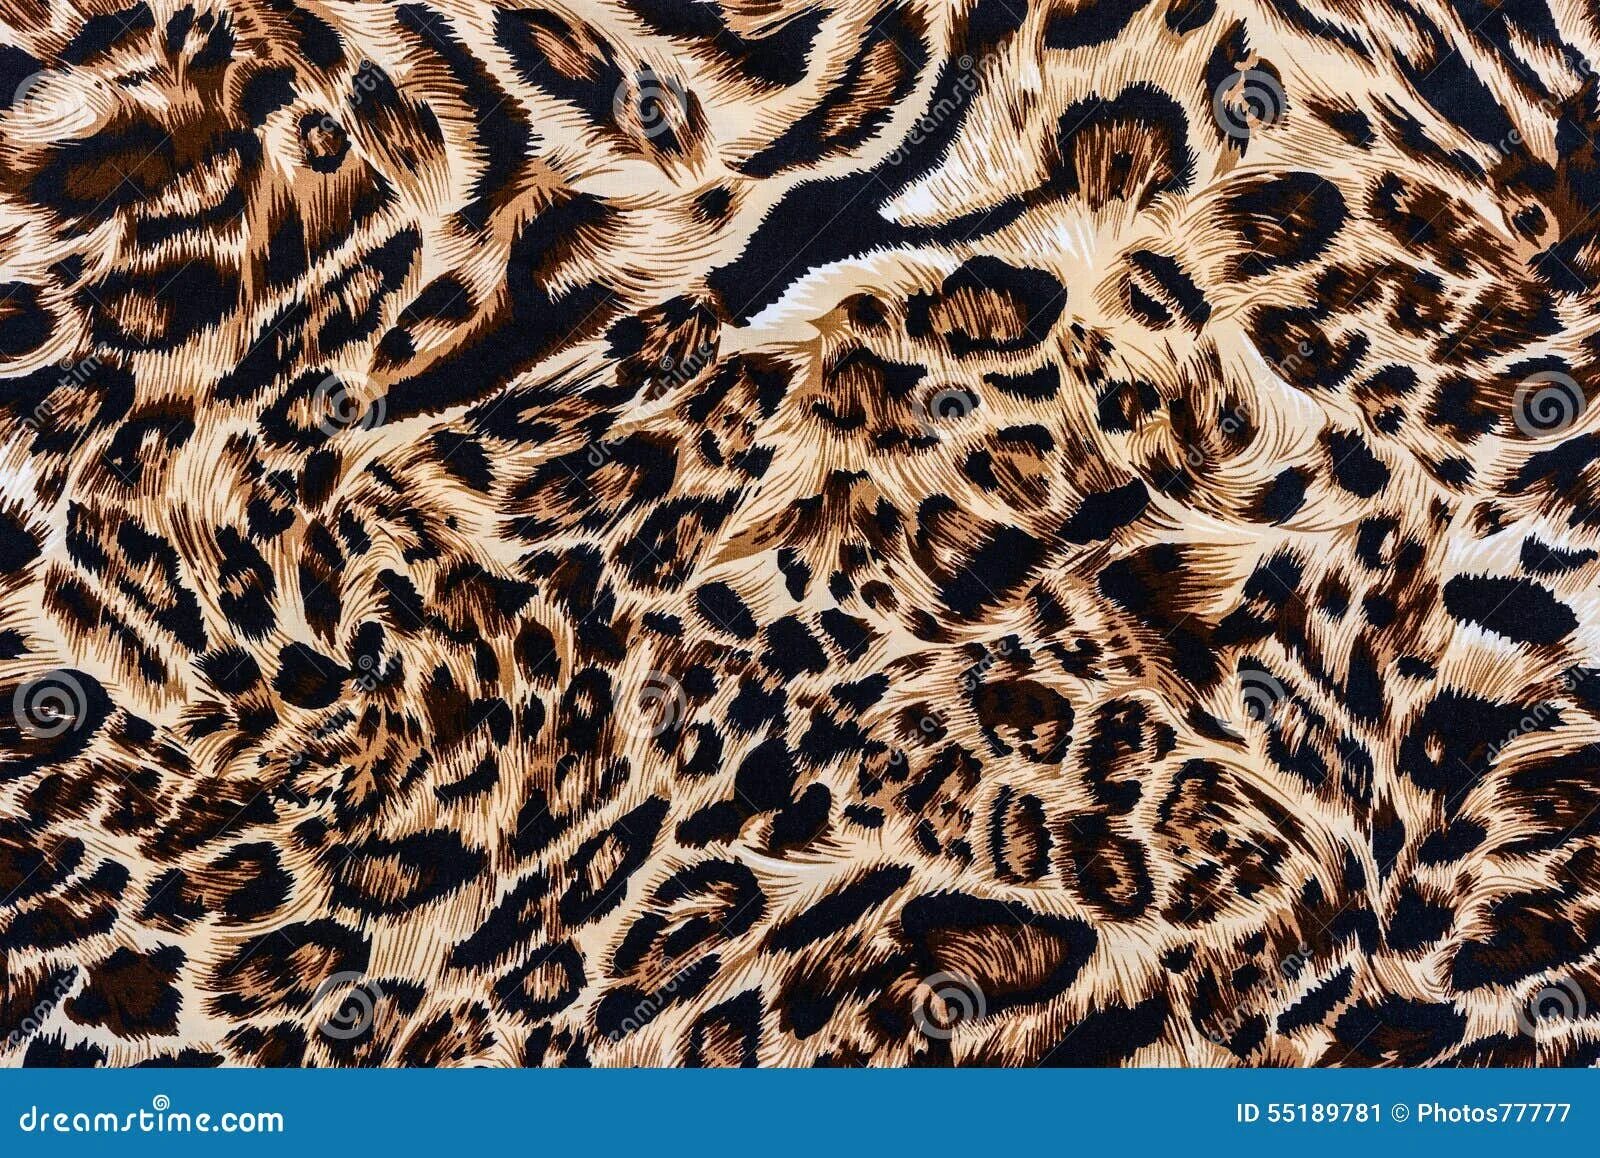 Леопард паттерн. Ткань леопард. Леопард шкура ткань. Мех леопарда текстура. Пестрая шкура